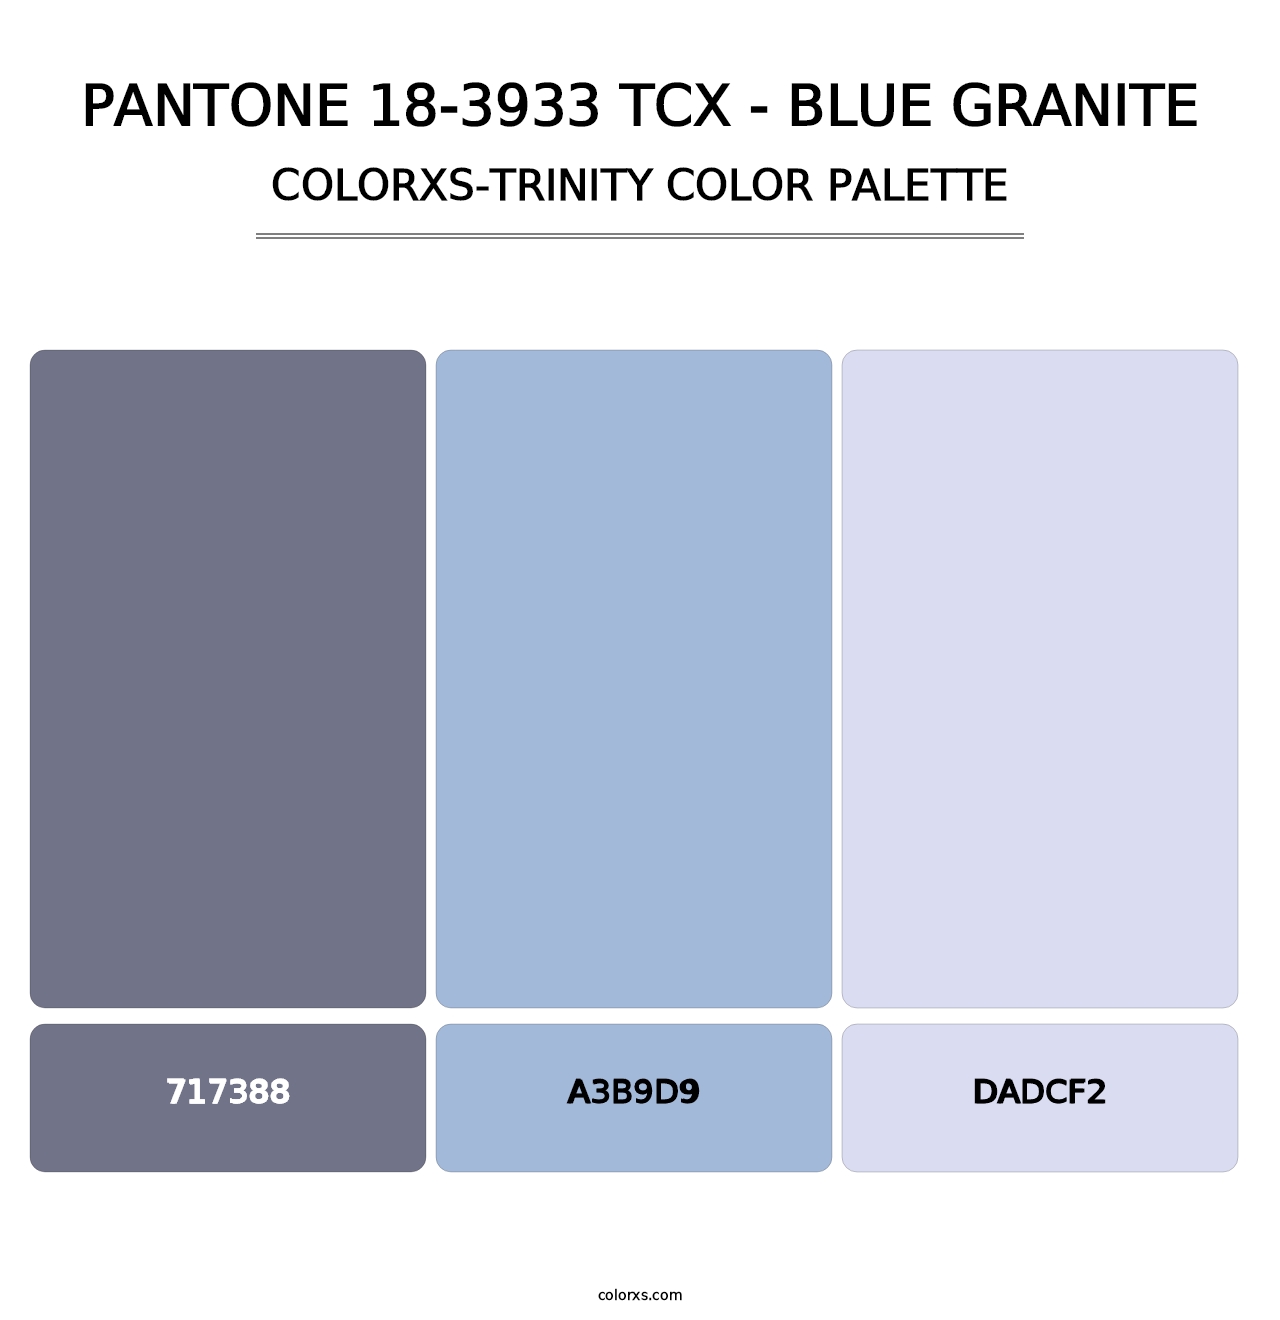 PANTONE 18-3933 TCX - Blue Granite - Colorxs Trinity Palette